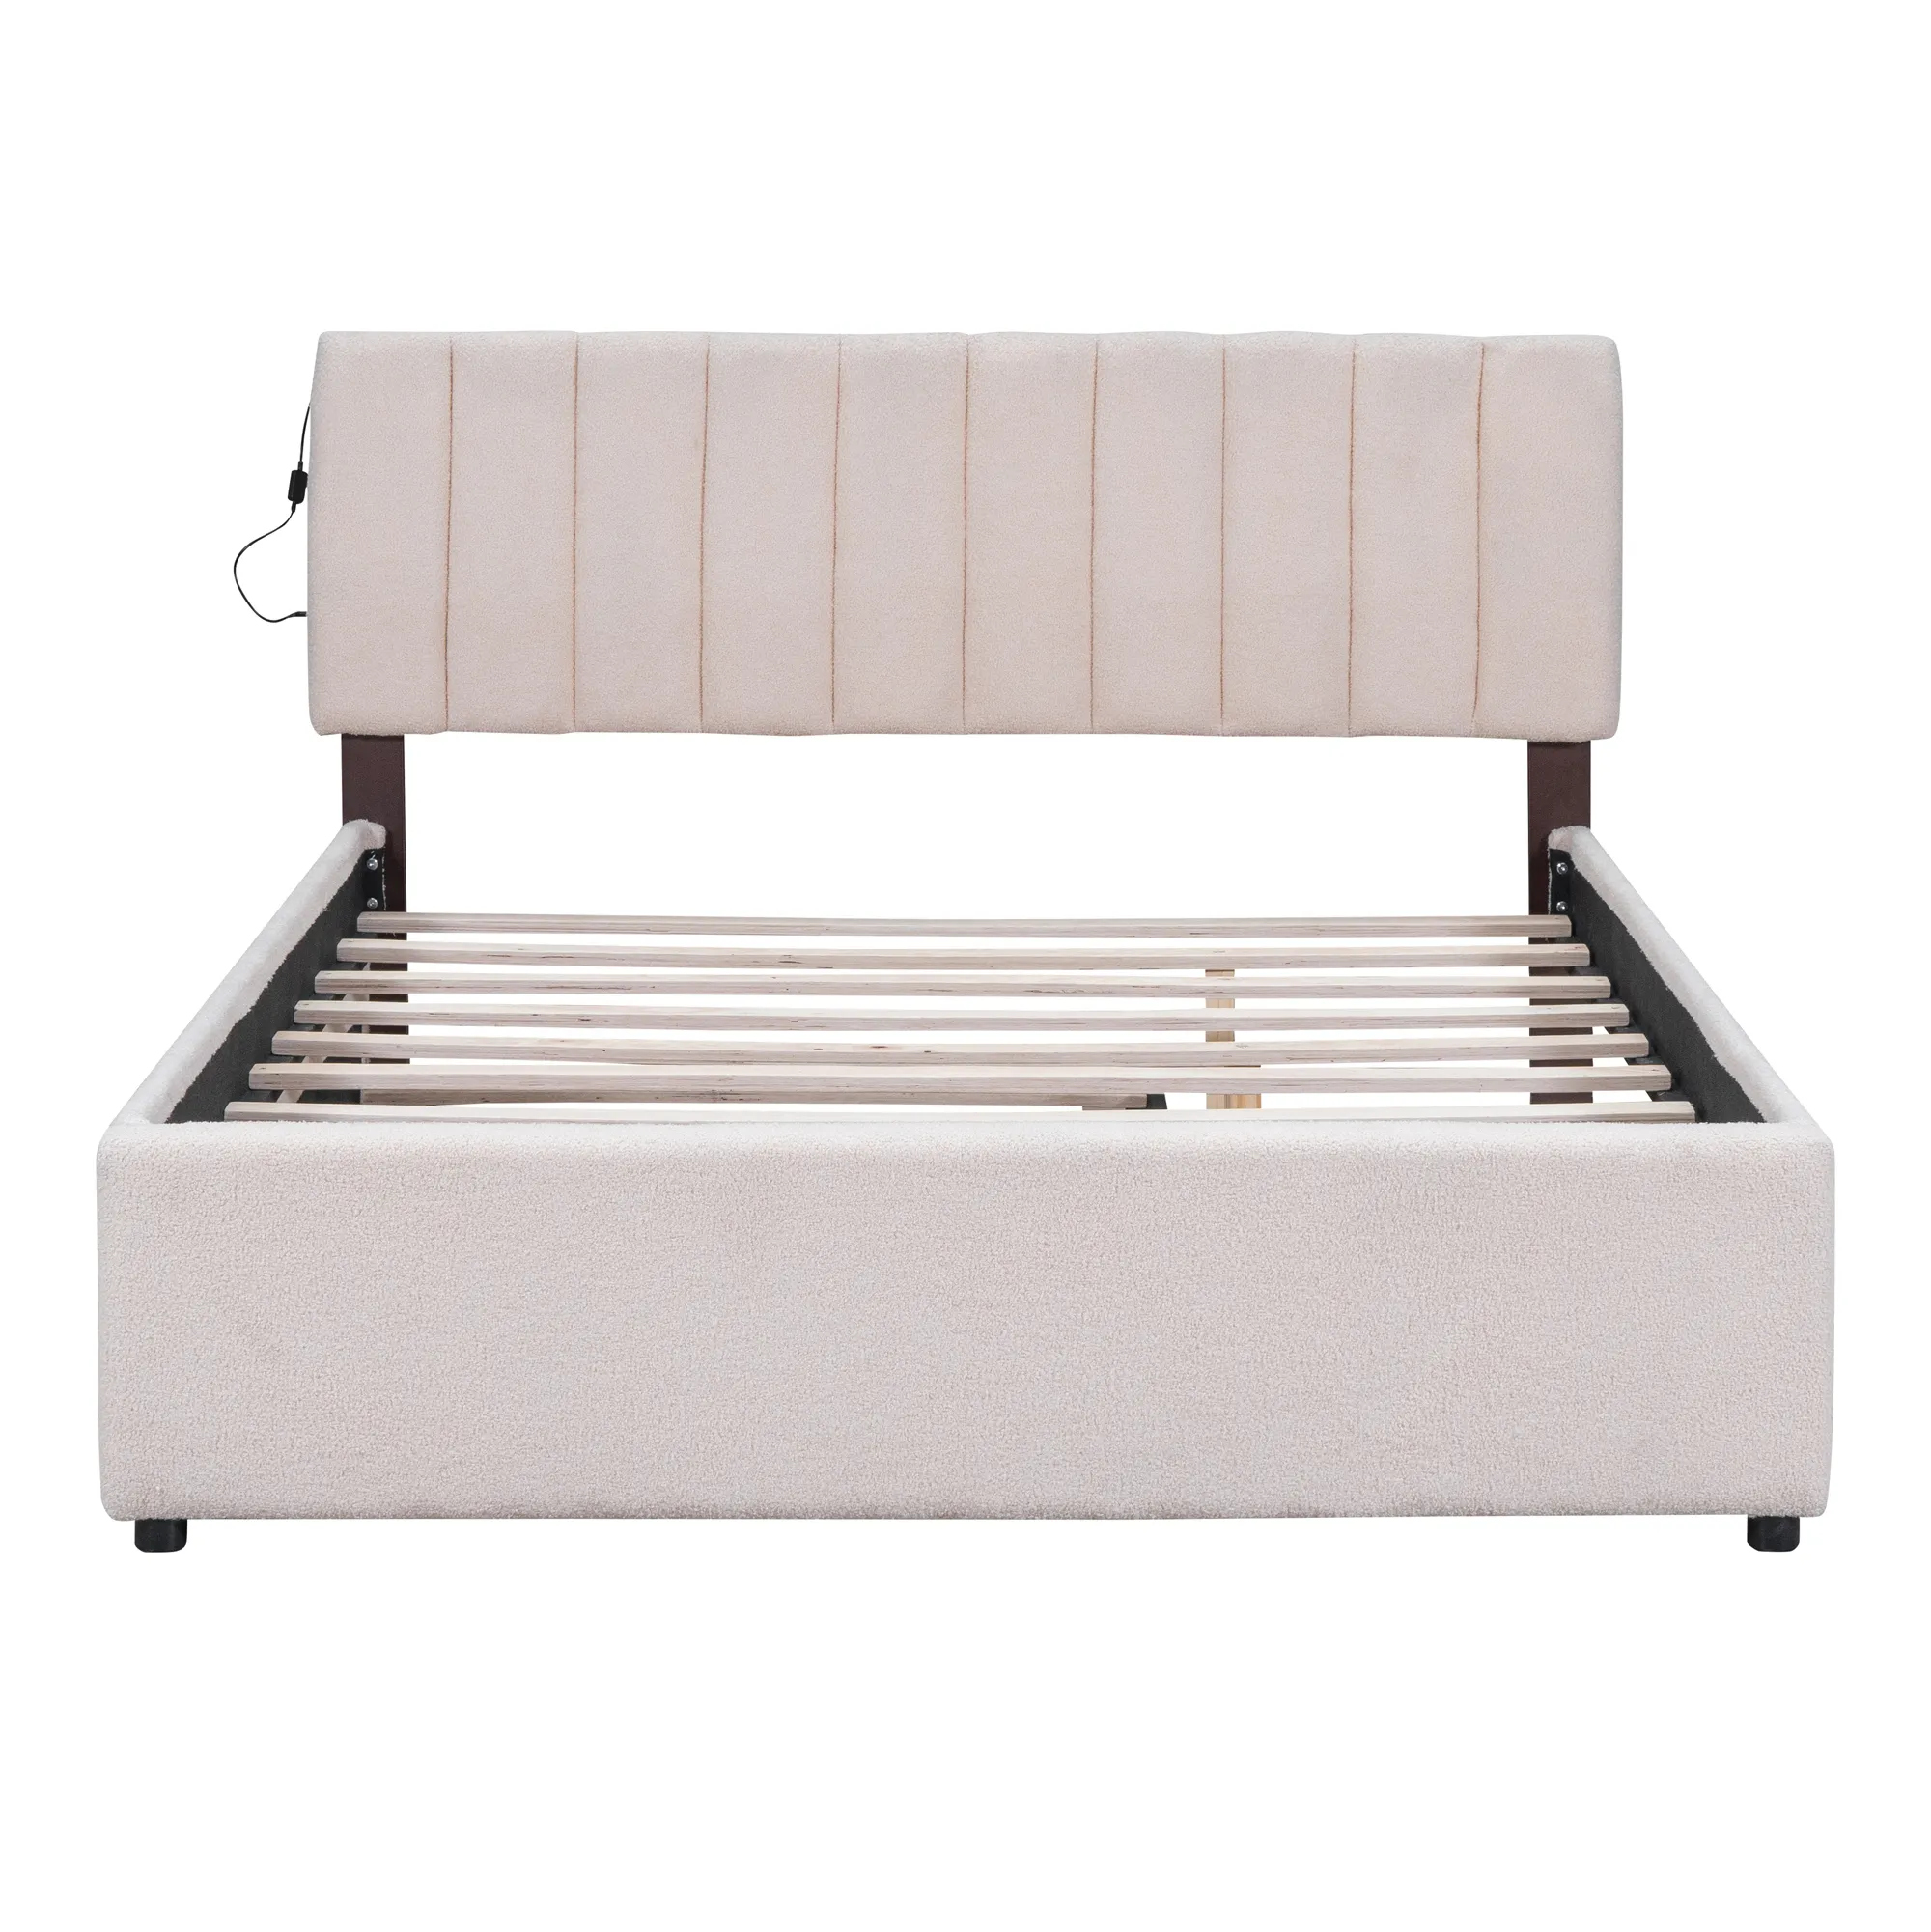 Merax Teddy Fleece Upholstered Platform Bed with Trundle